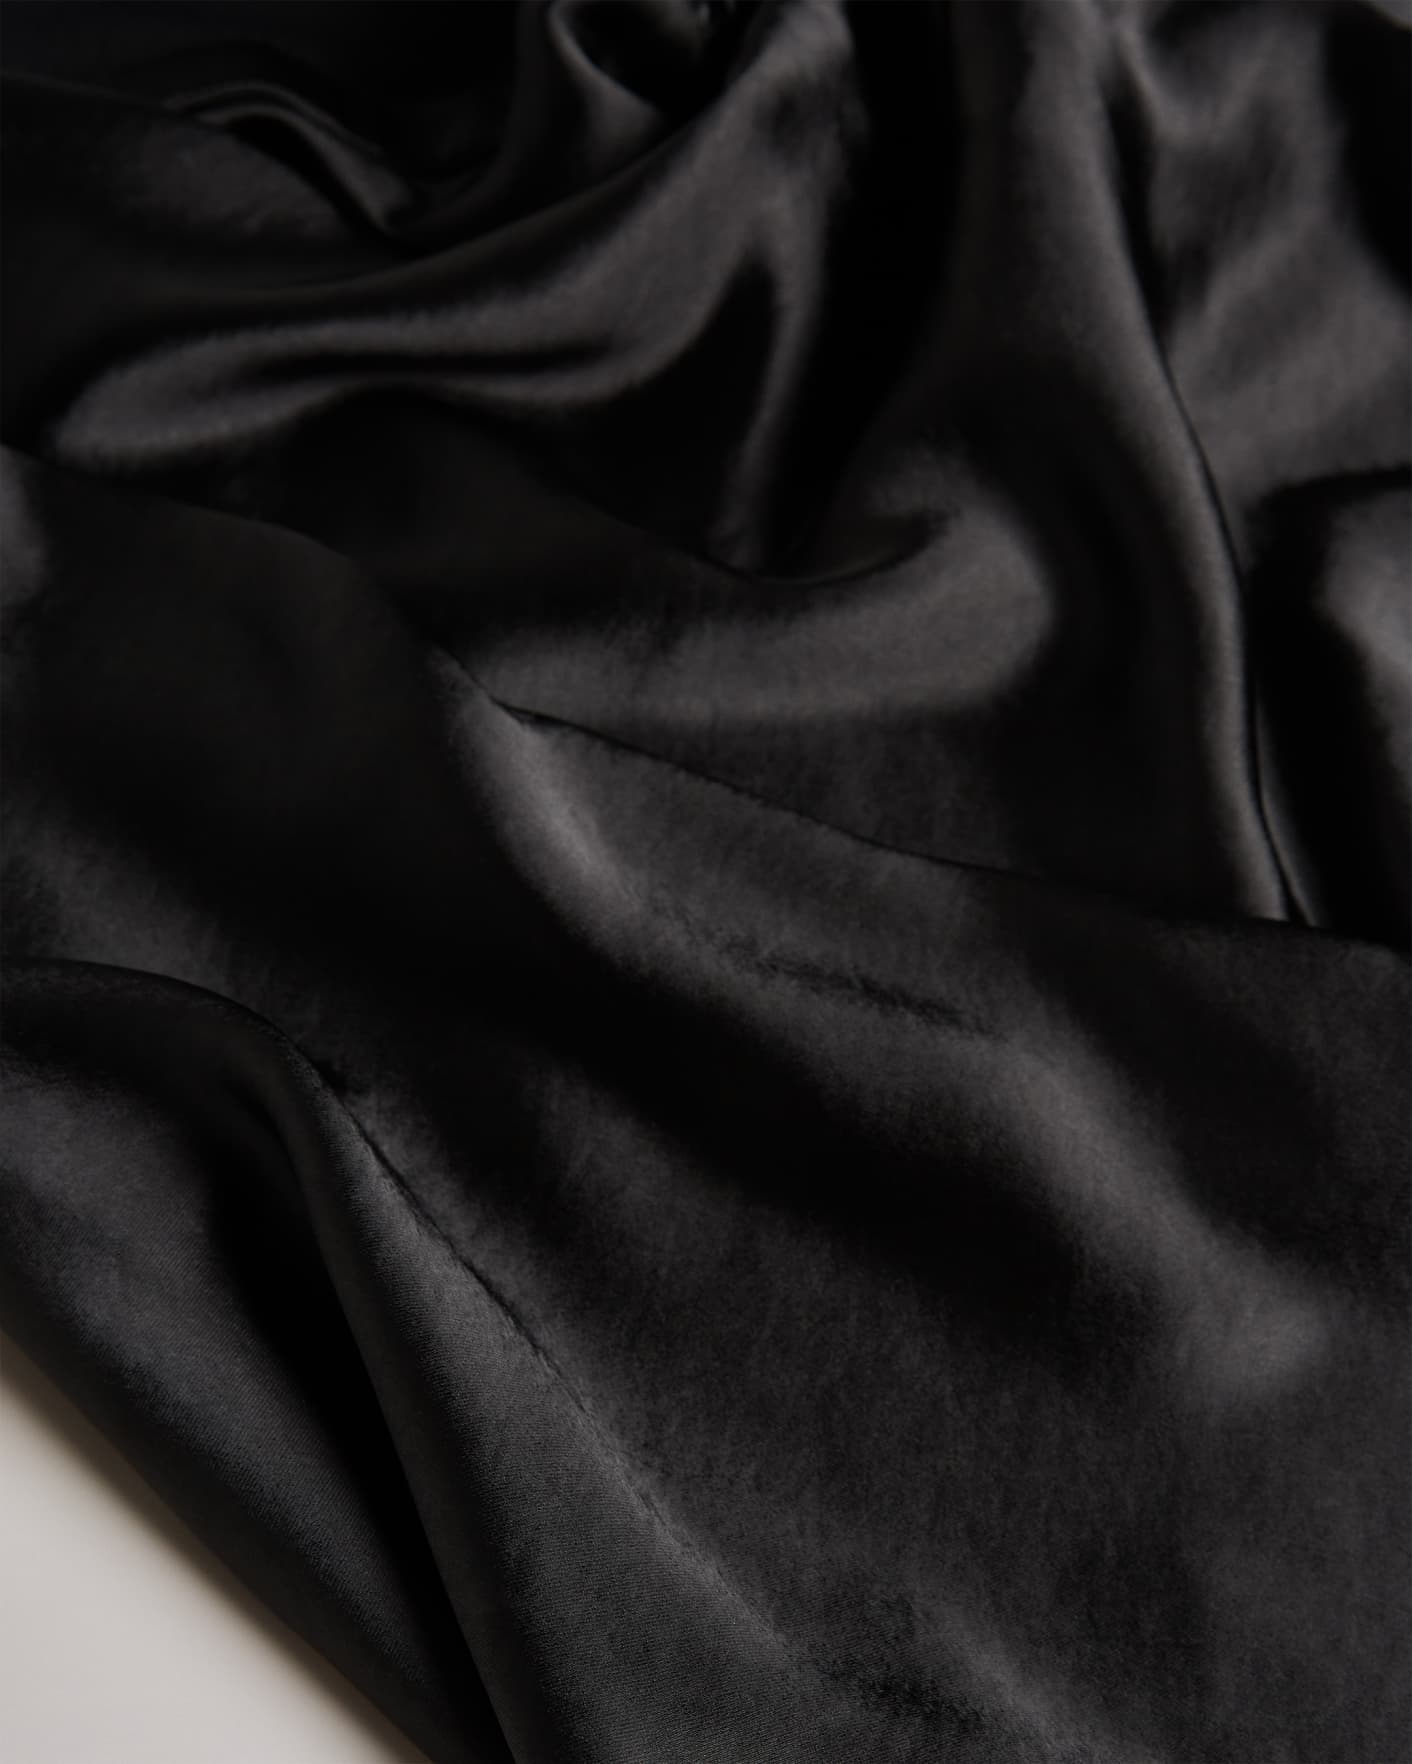 Black Asymmetric Knit Bodice Dress With Satin Skirt Ted Baker